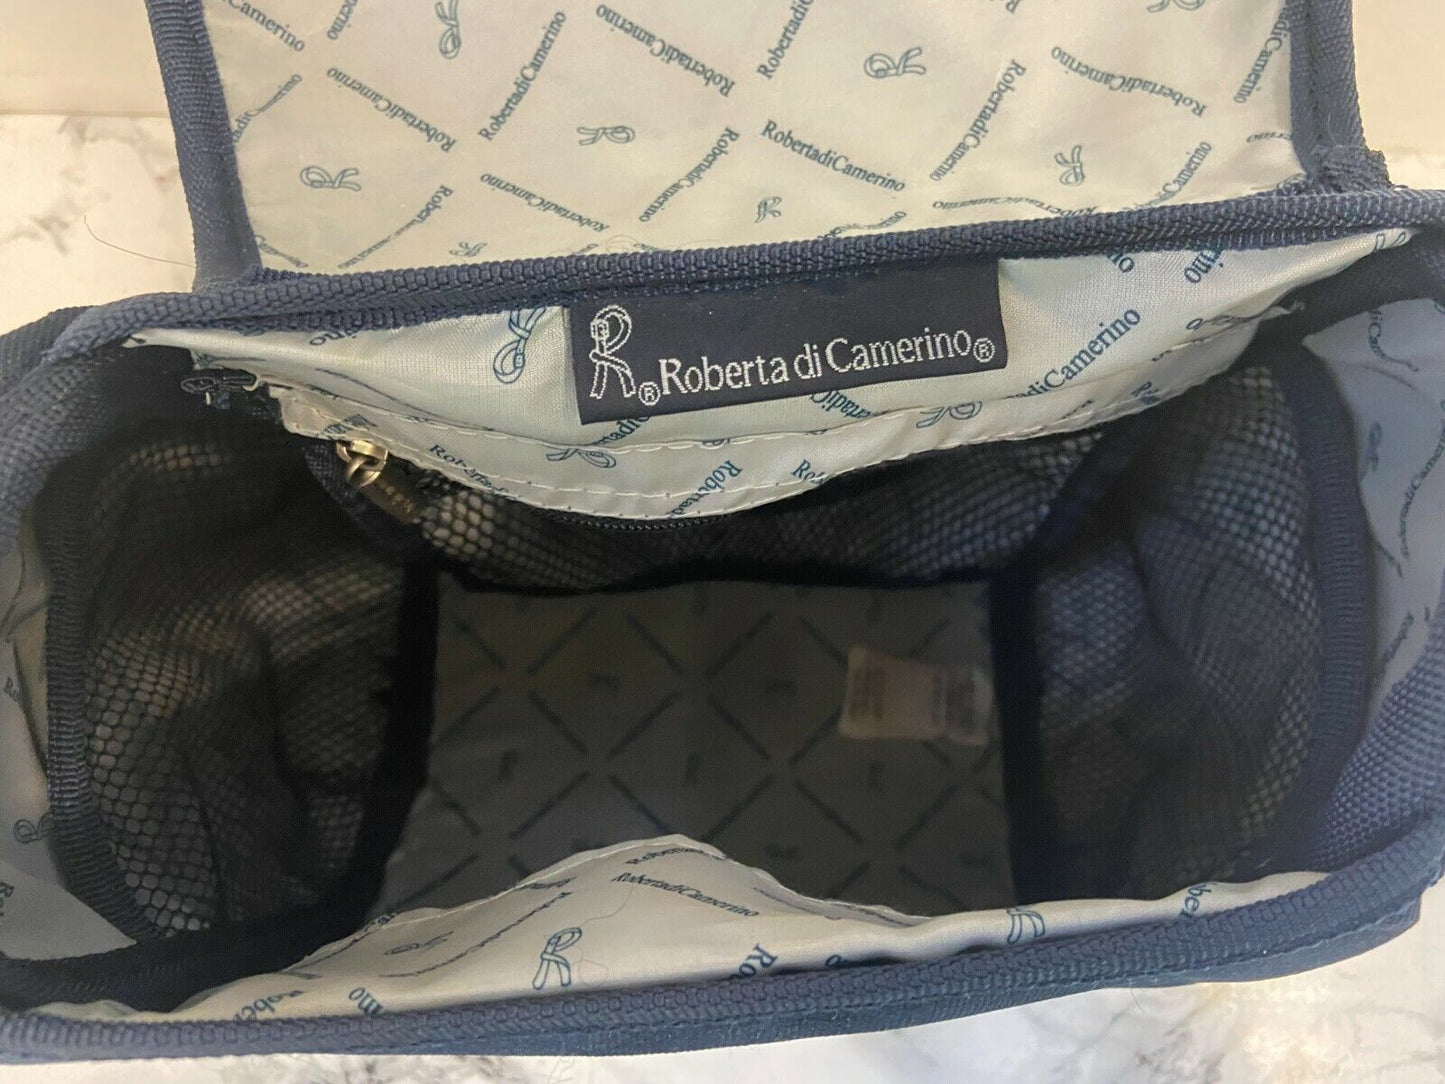 Roberta di Camerino rigid bag